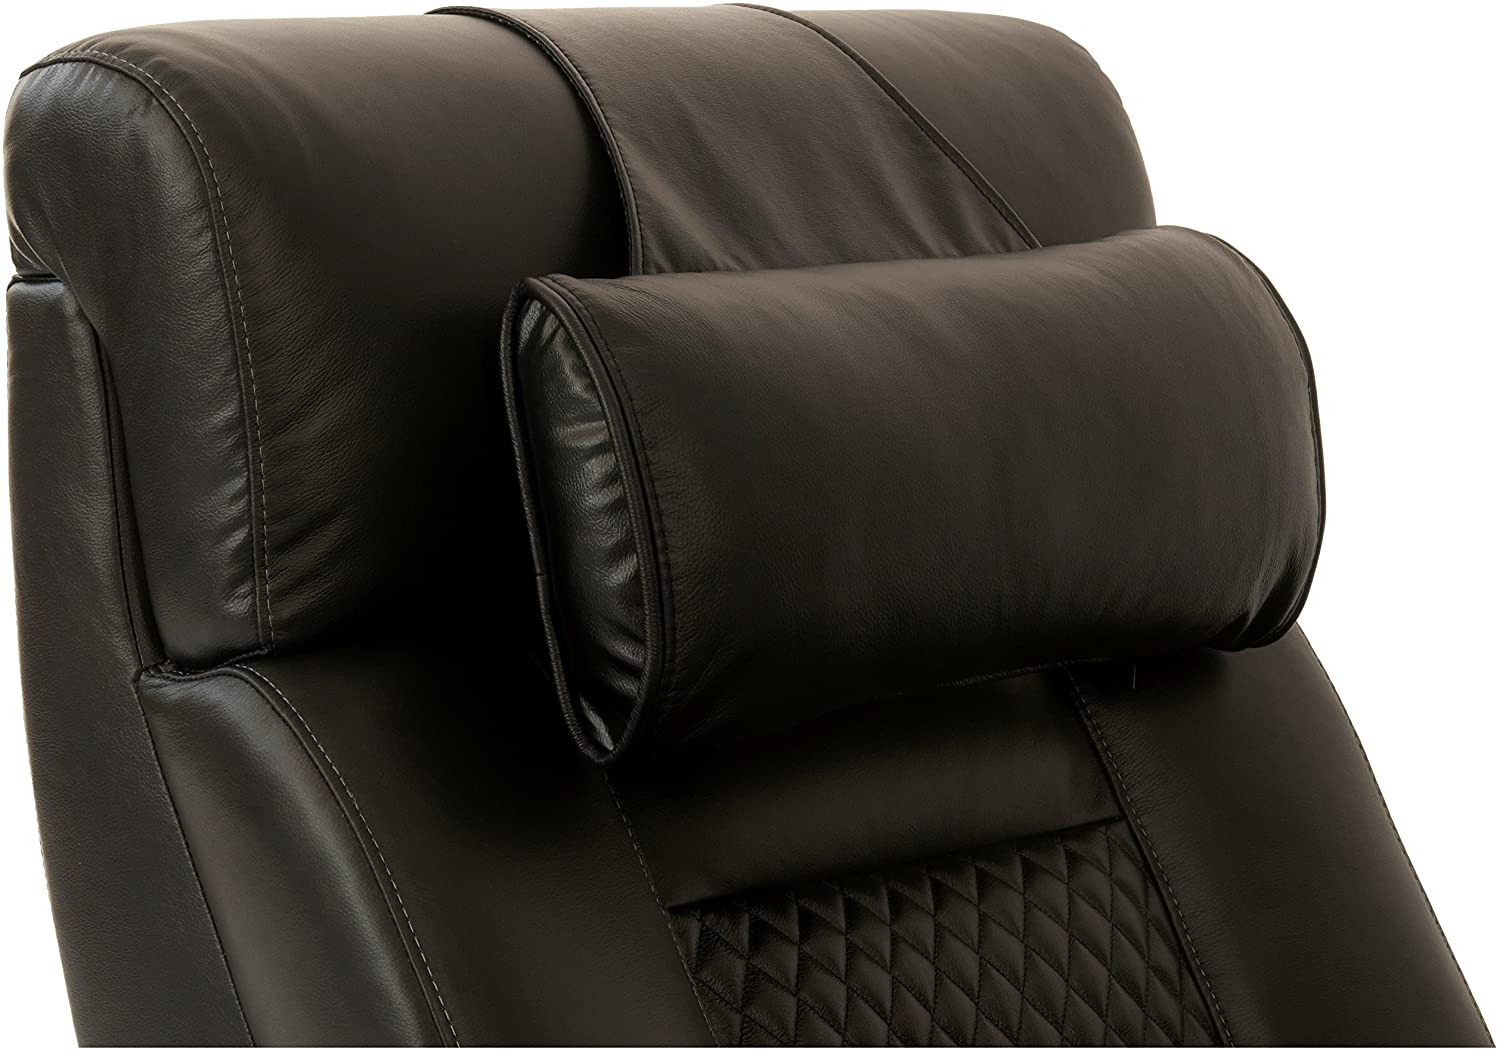 Octane Seating Octane Black Leather Recliner Neck Pillow